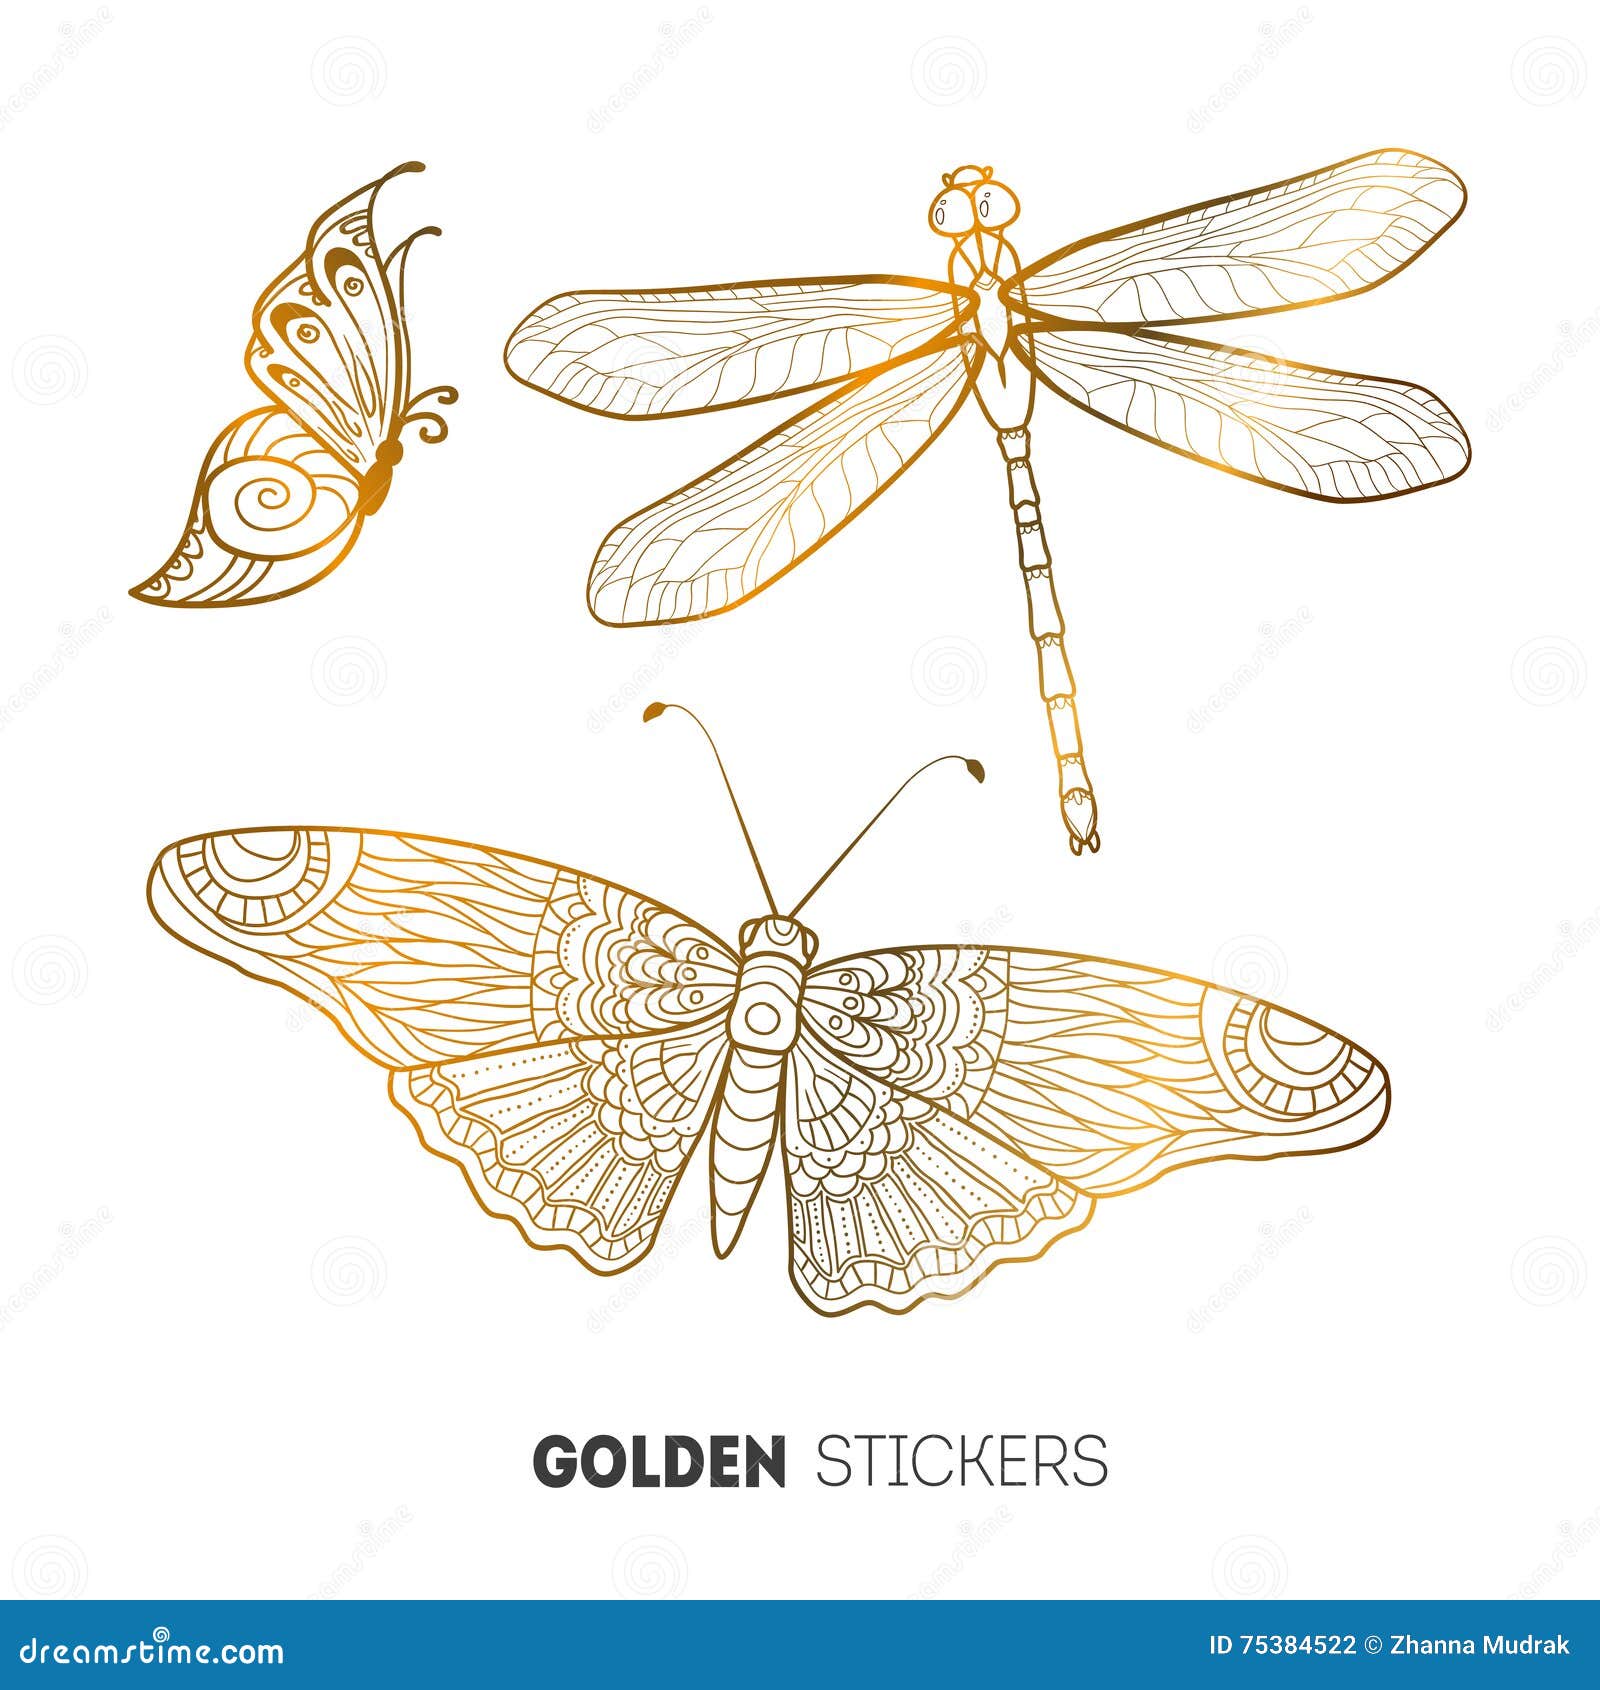 Sticker Papillon libellule - Autocollant Papillon libellule